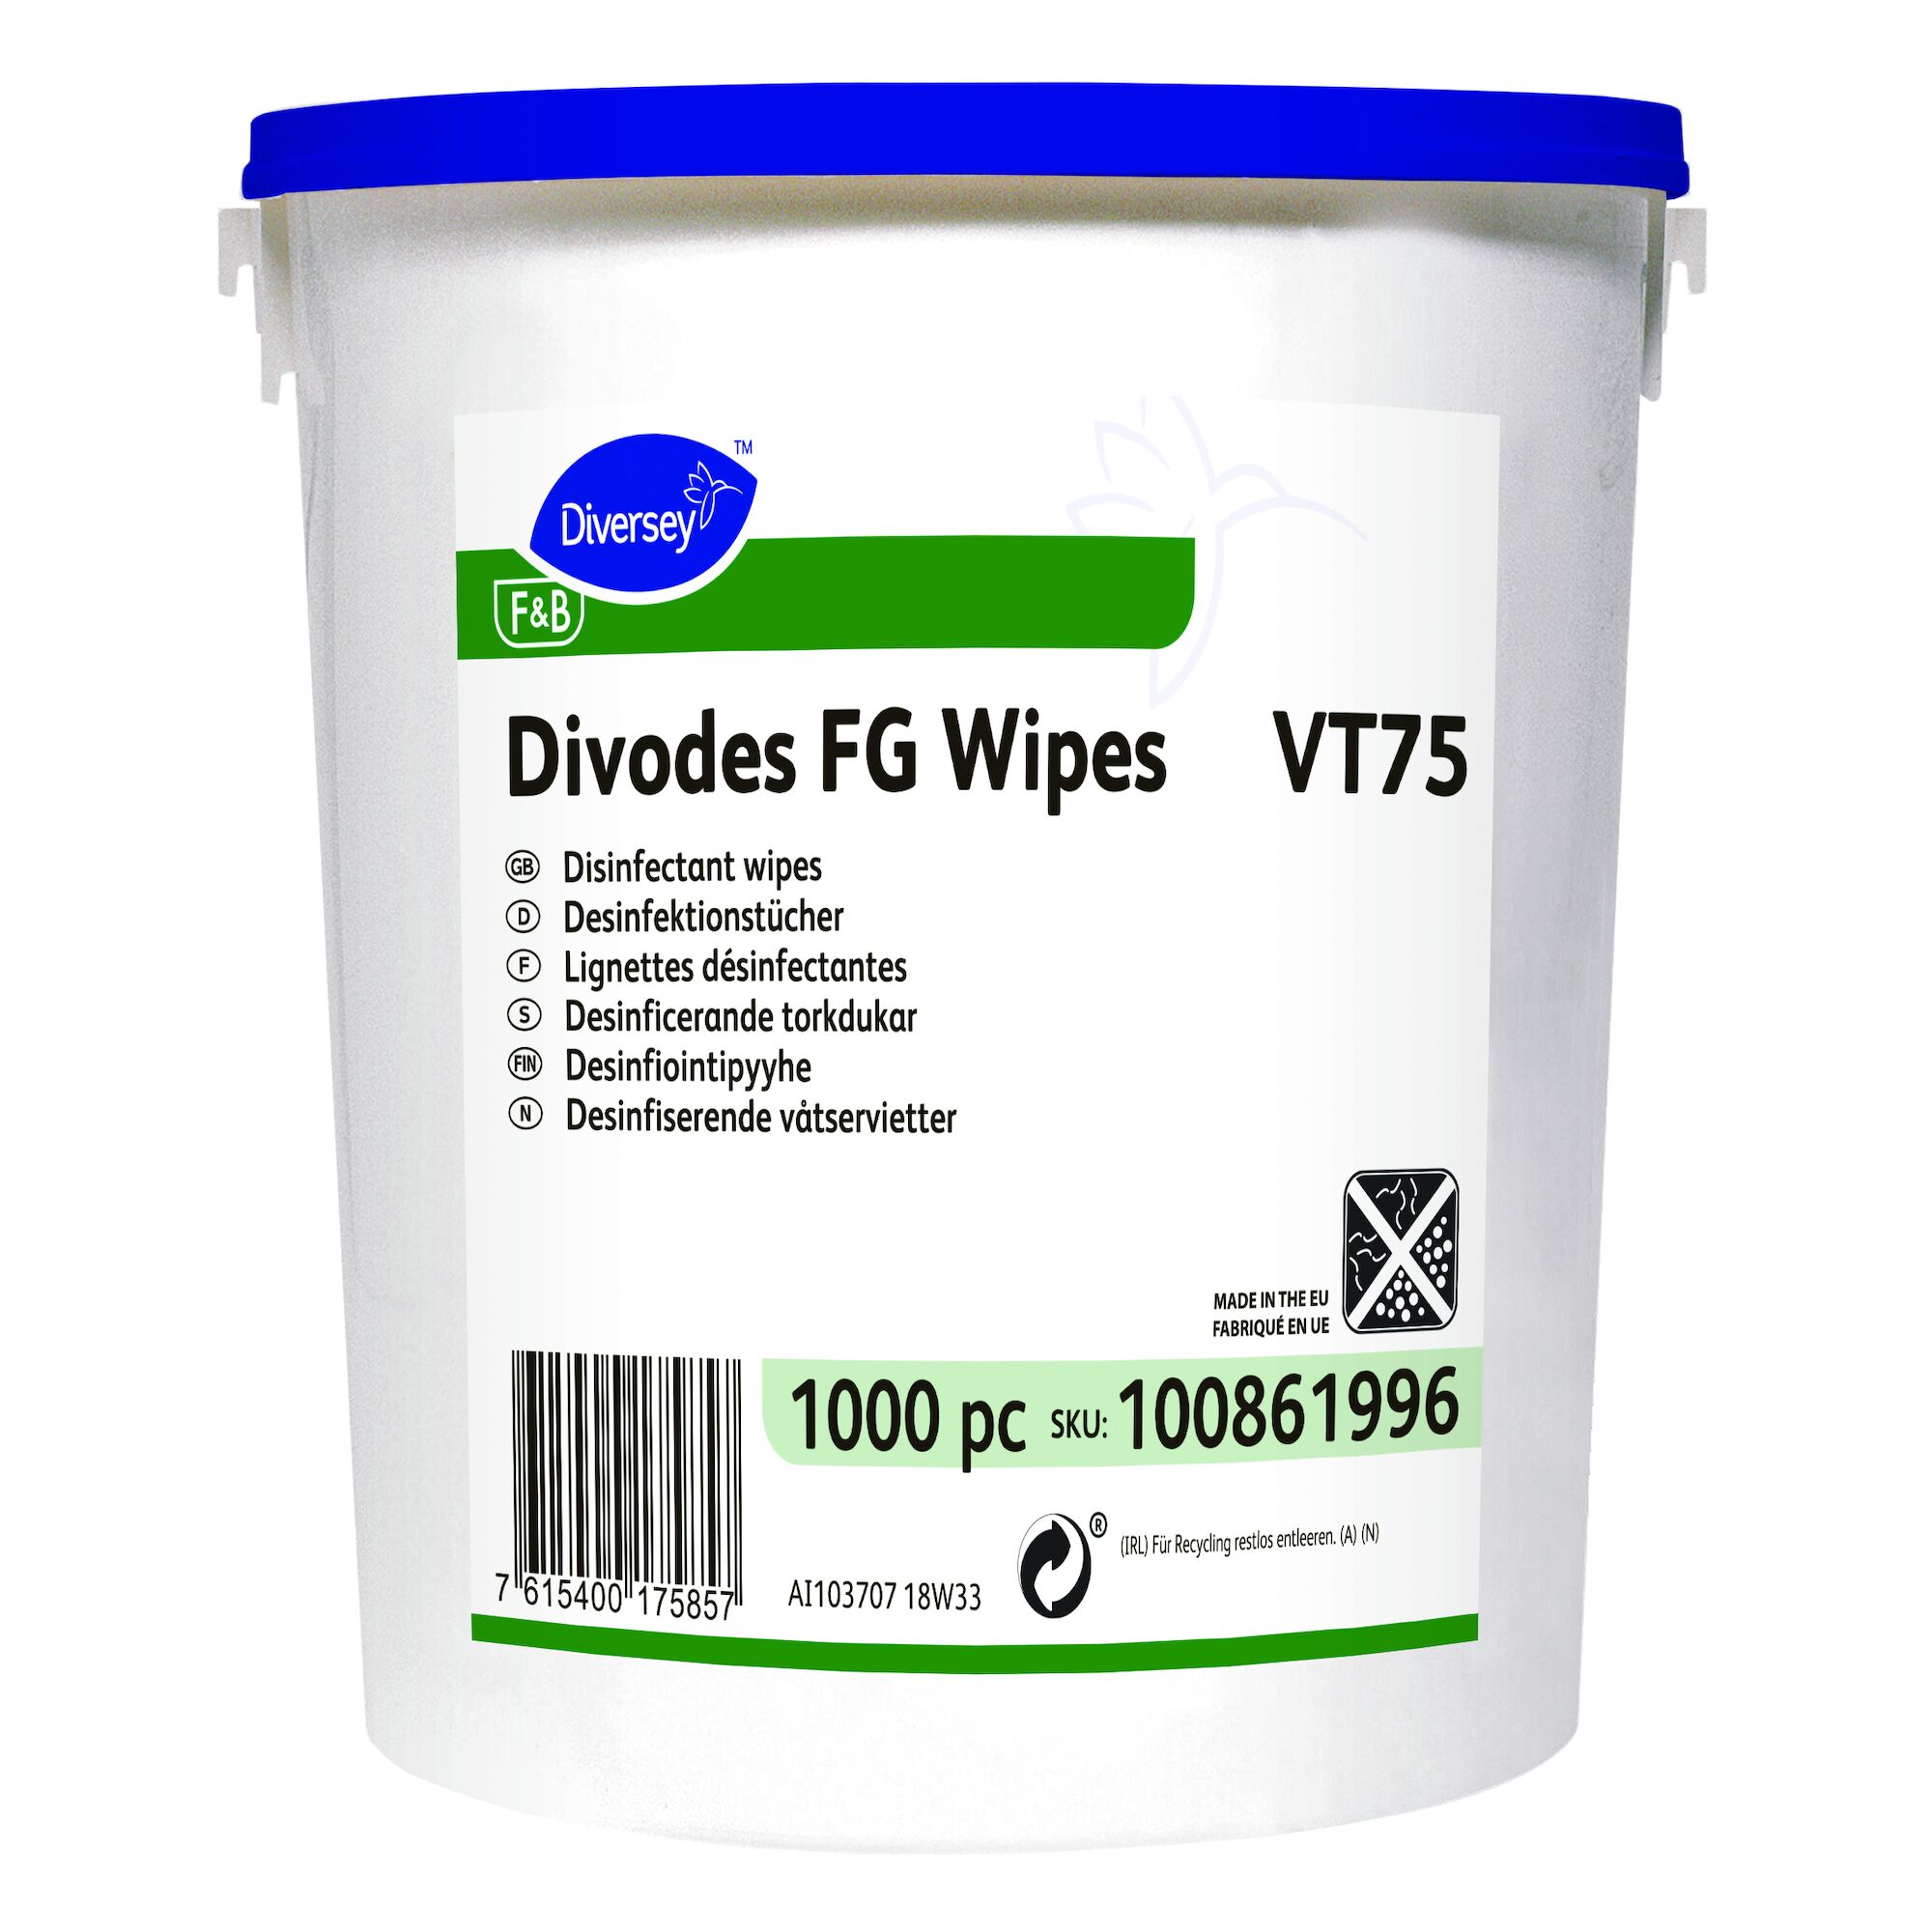 100861996-Divodes-FG-Wipes-VT75-1000pc.jpg